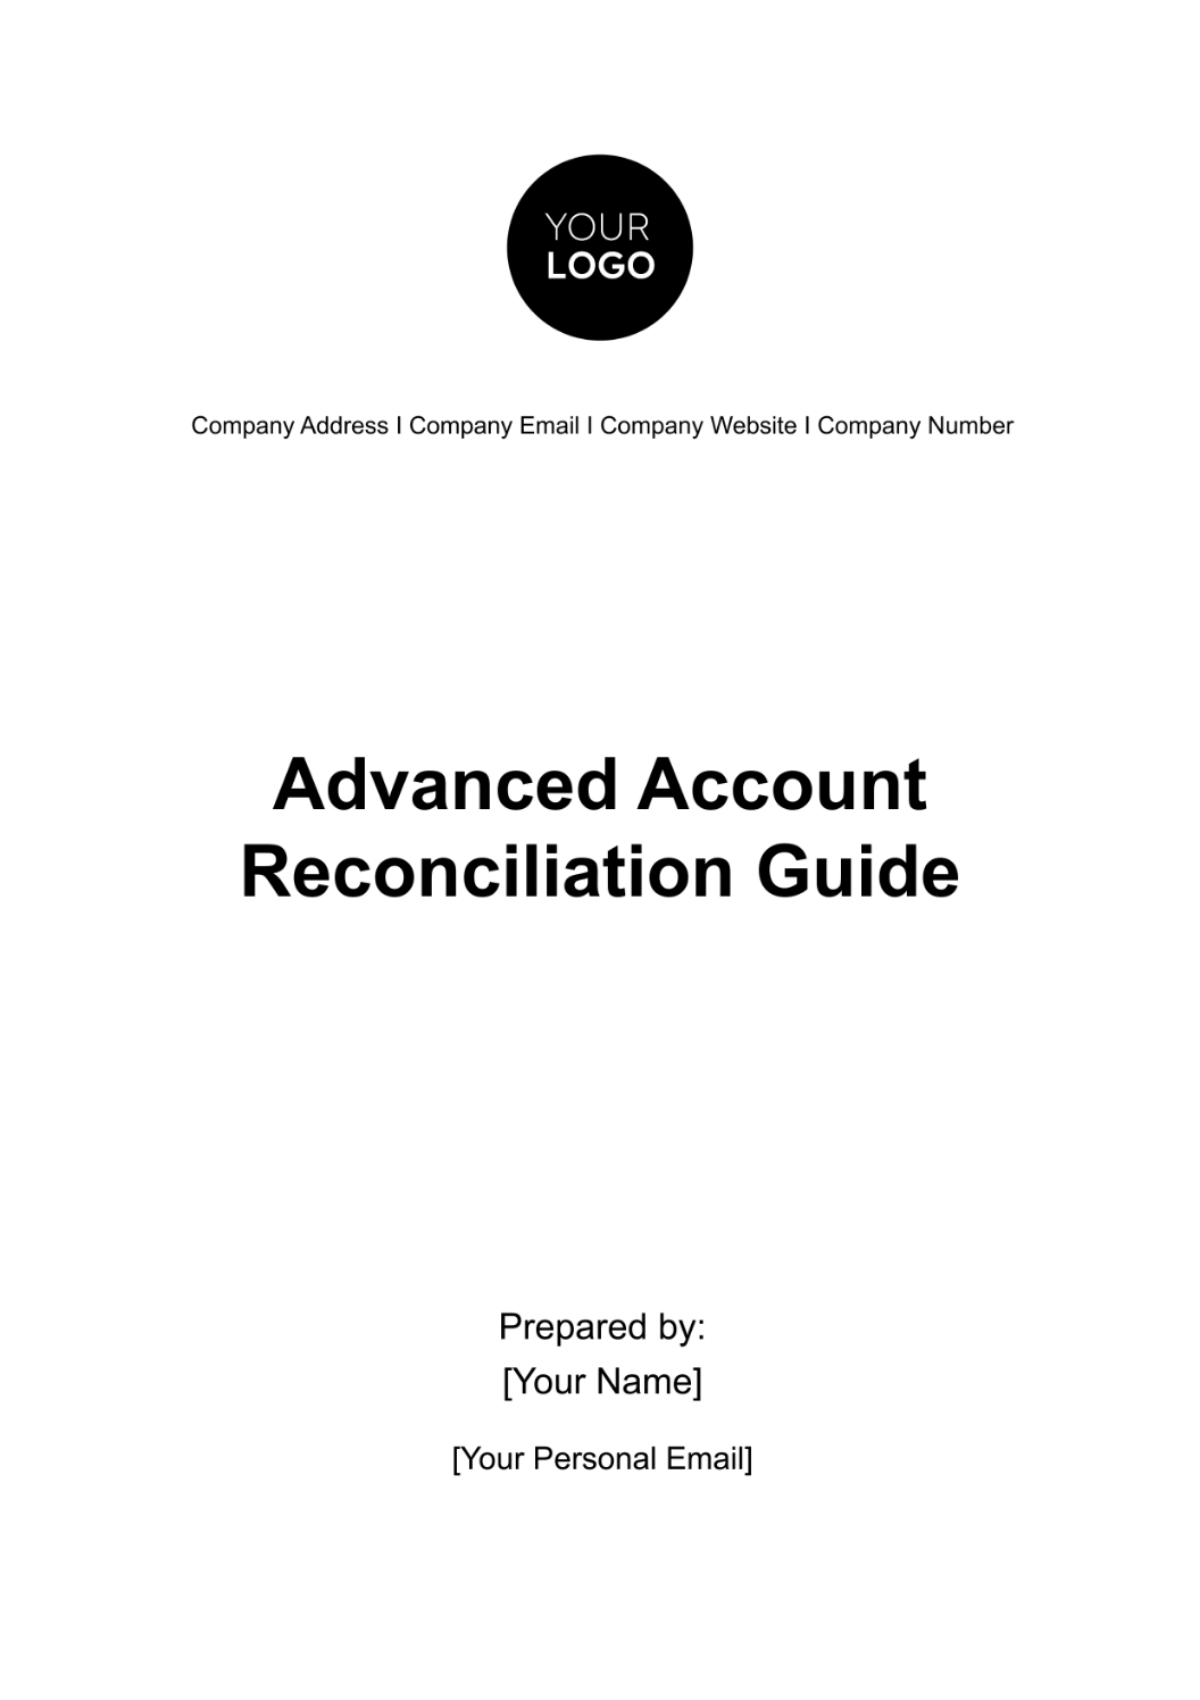 Advanced Account Reconciliation Guide Template